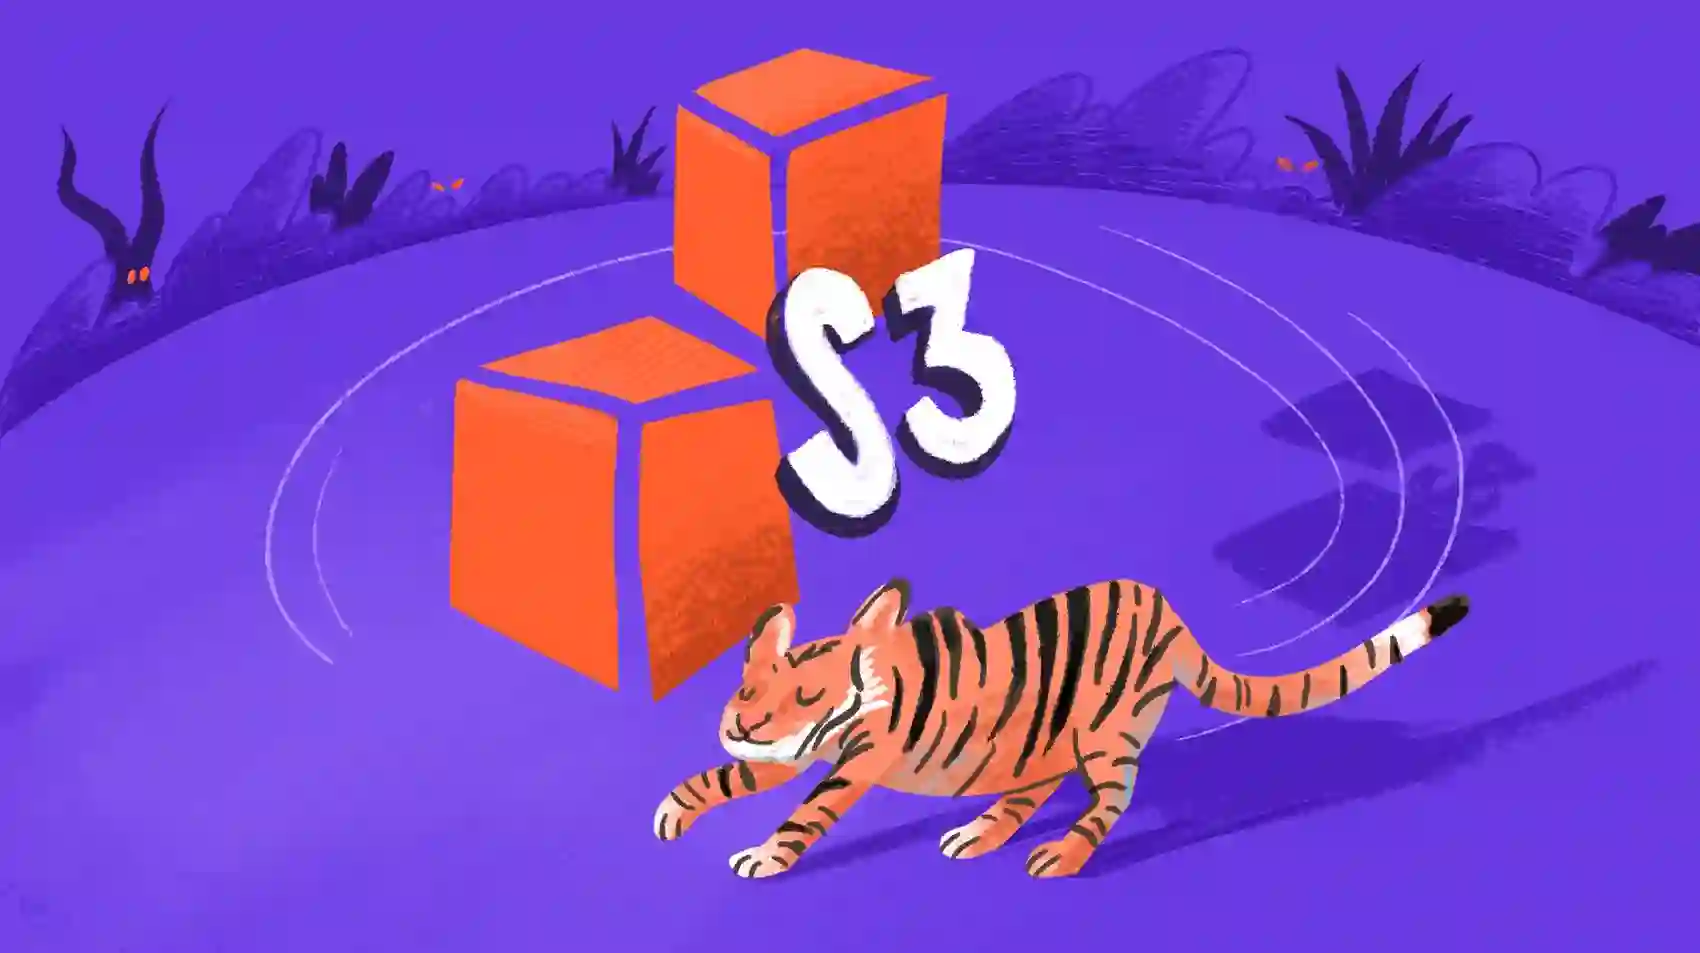 Stylized Tiger circling a S3 Logo.